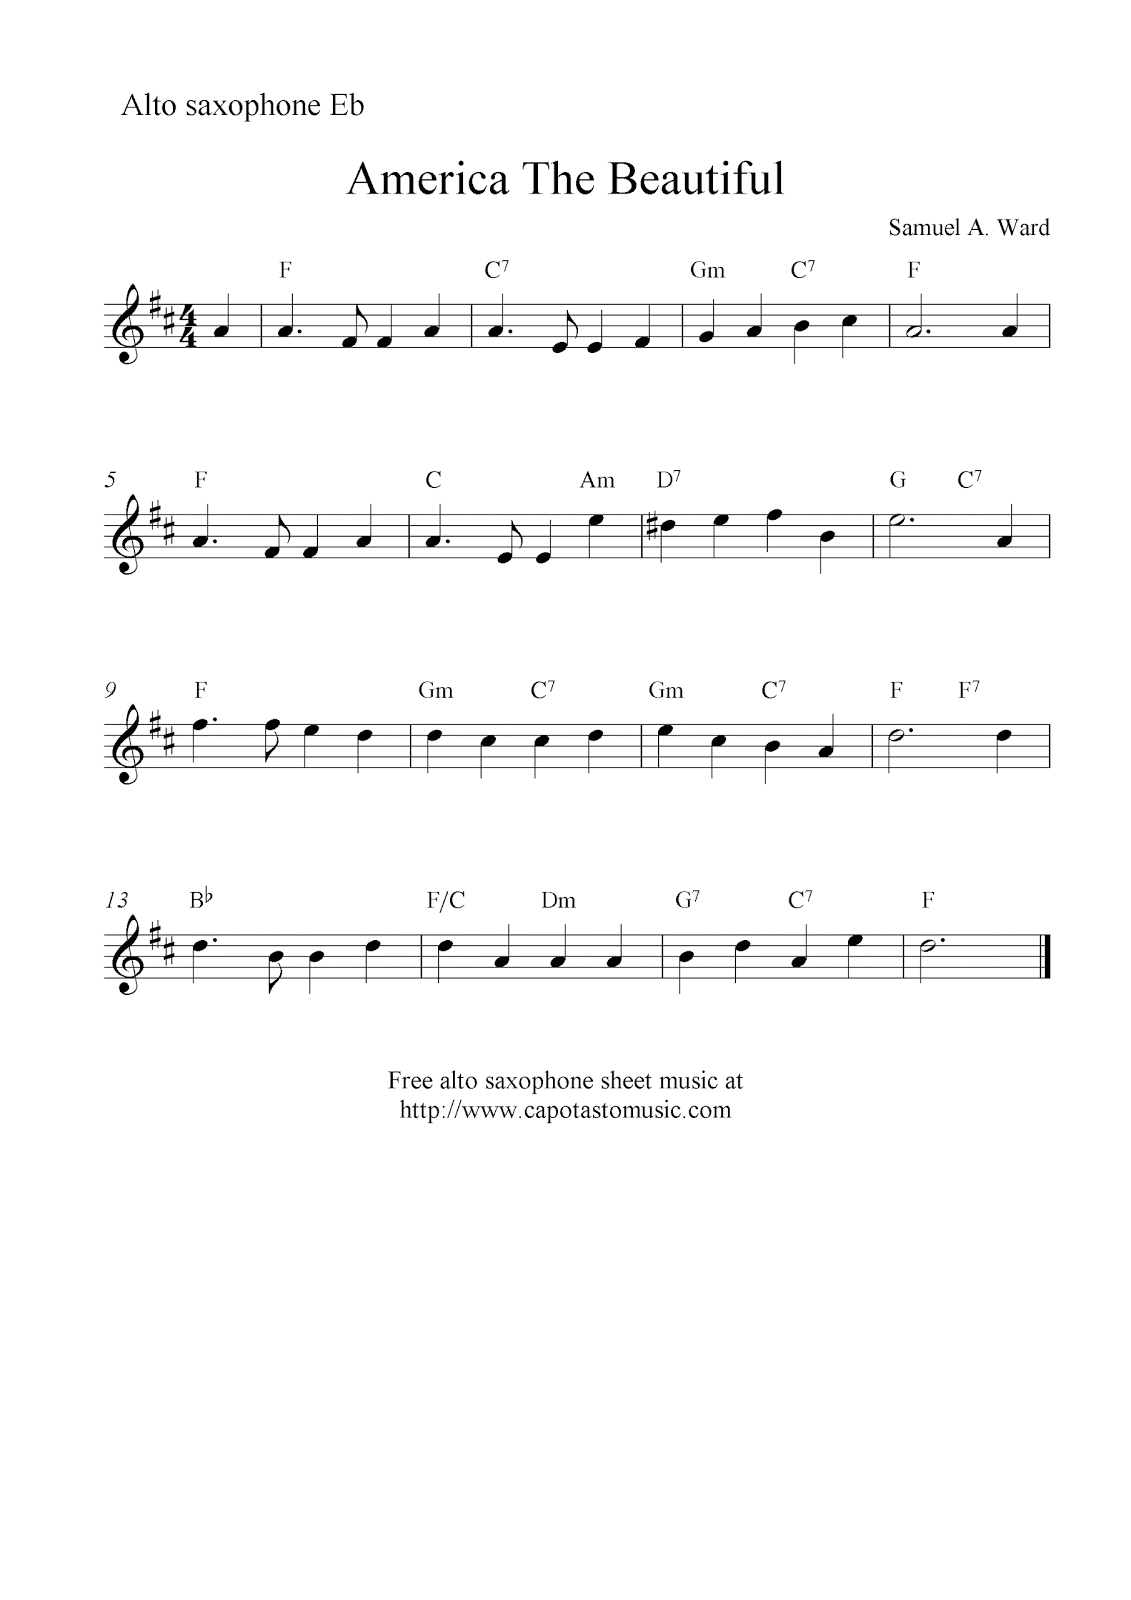 America The Beautiful, Free Alto Saxophone Sheet Music Notes - Free Printable Alto Saxophone Sheet Music